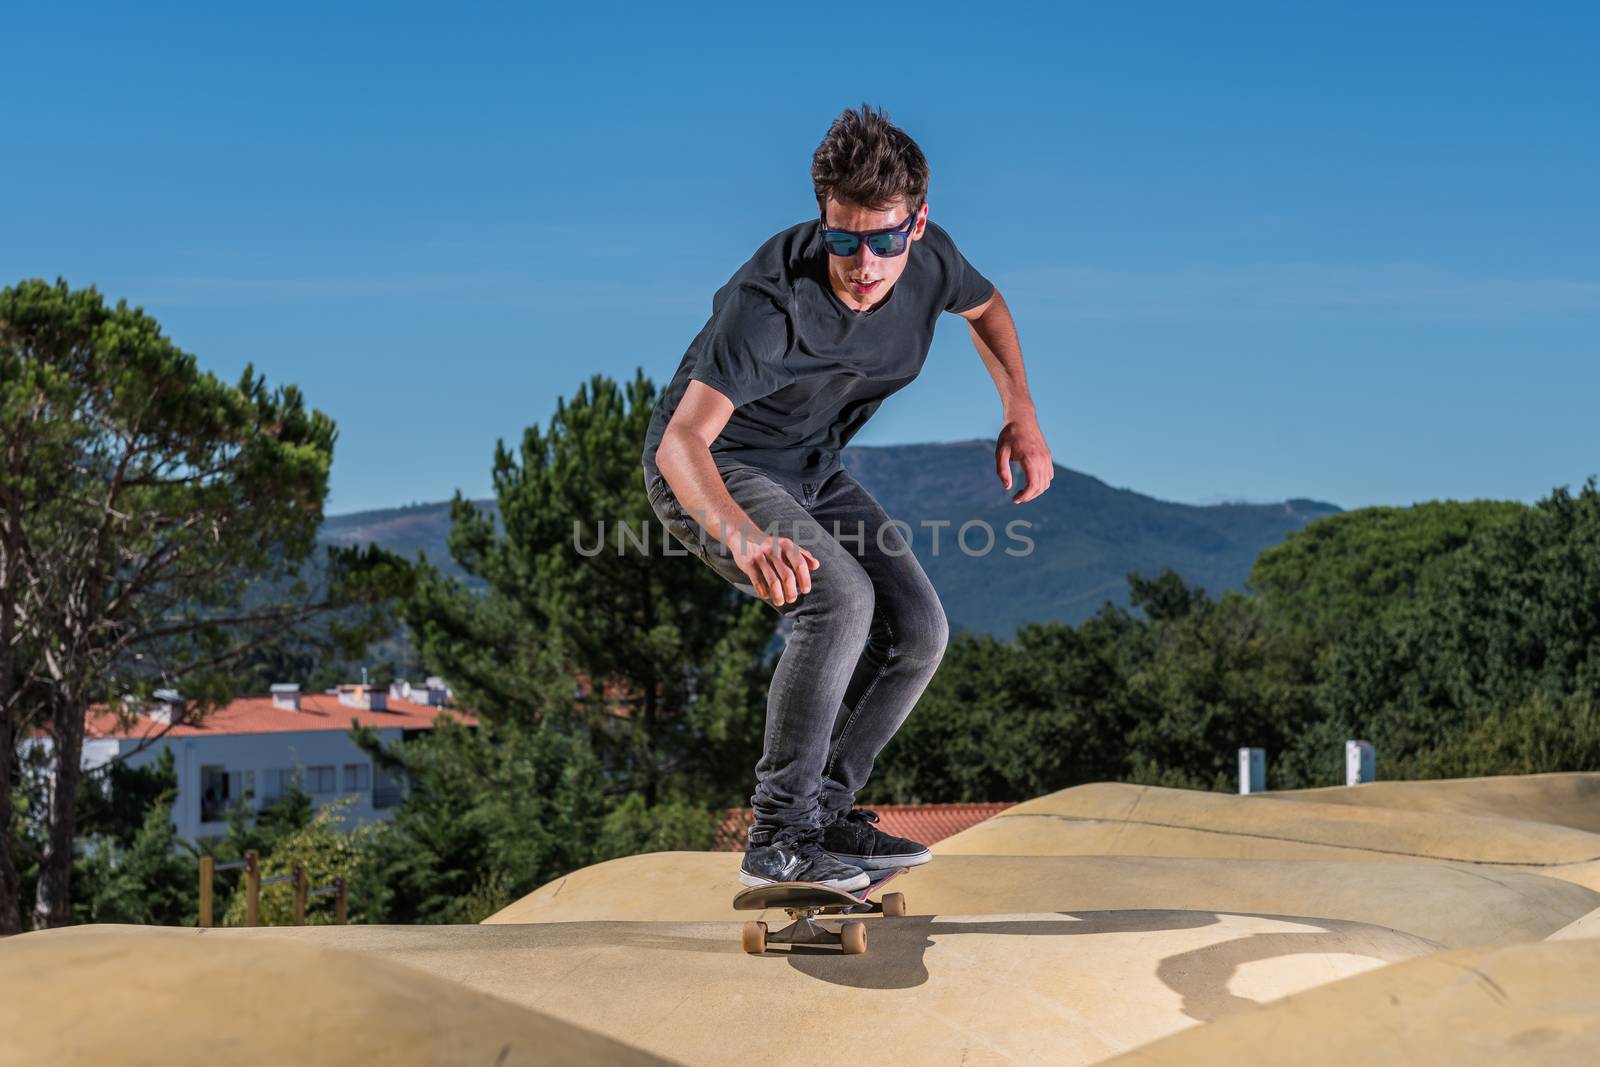 Skateboarder on a pump track park by homydesign